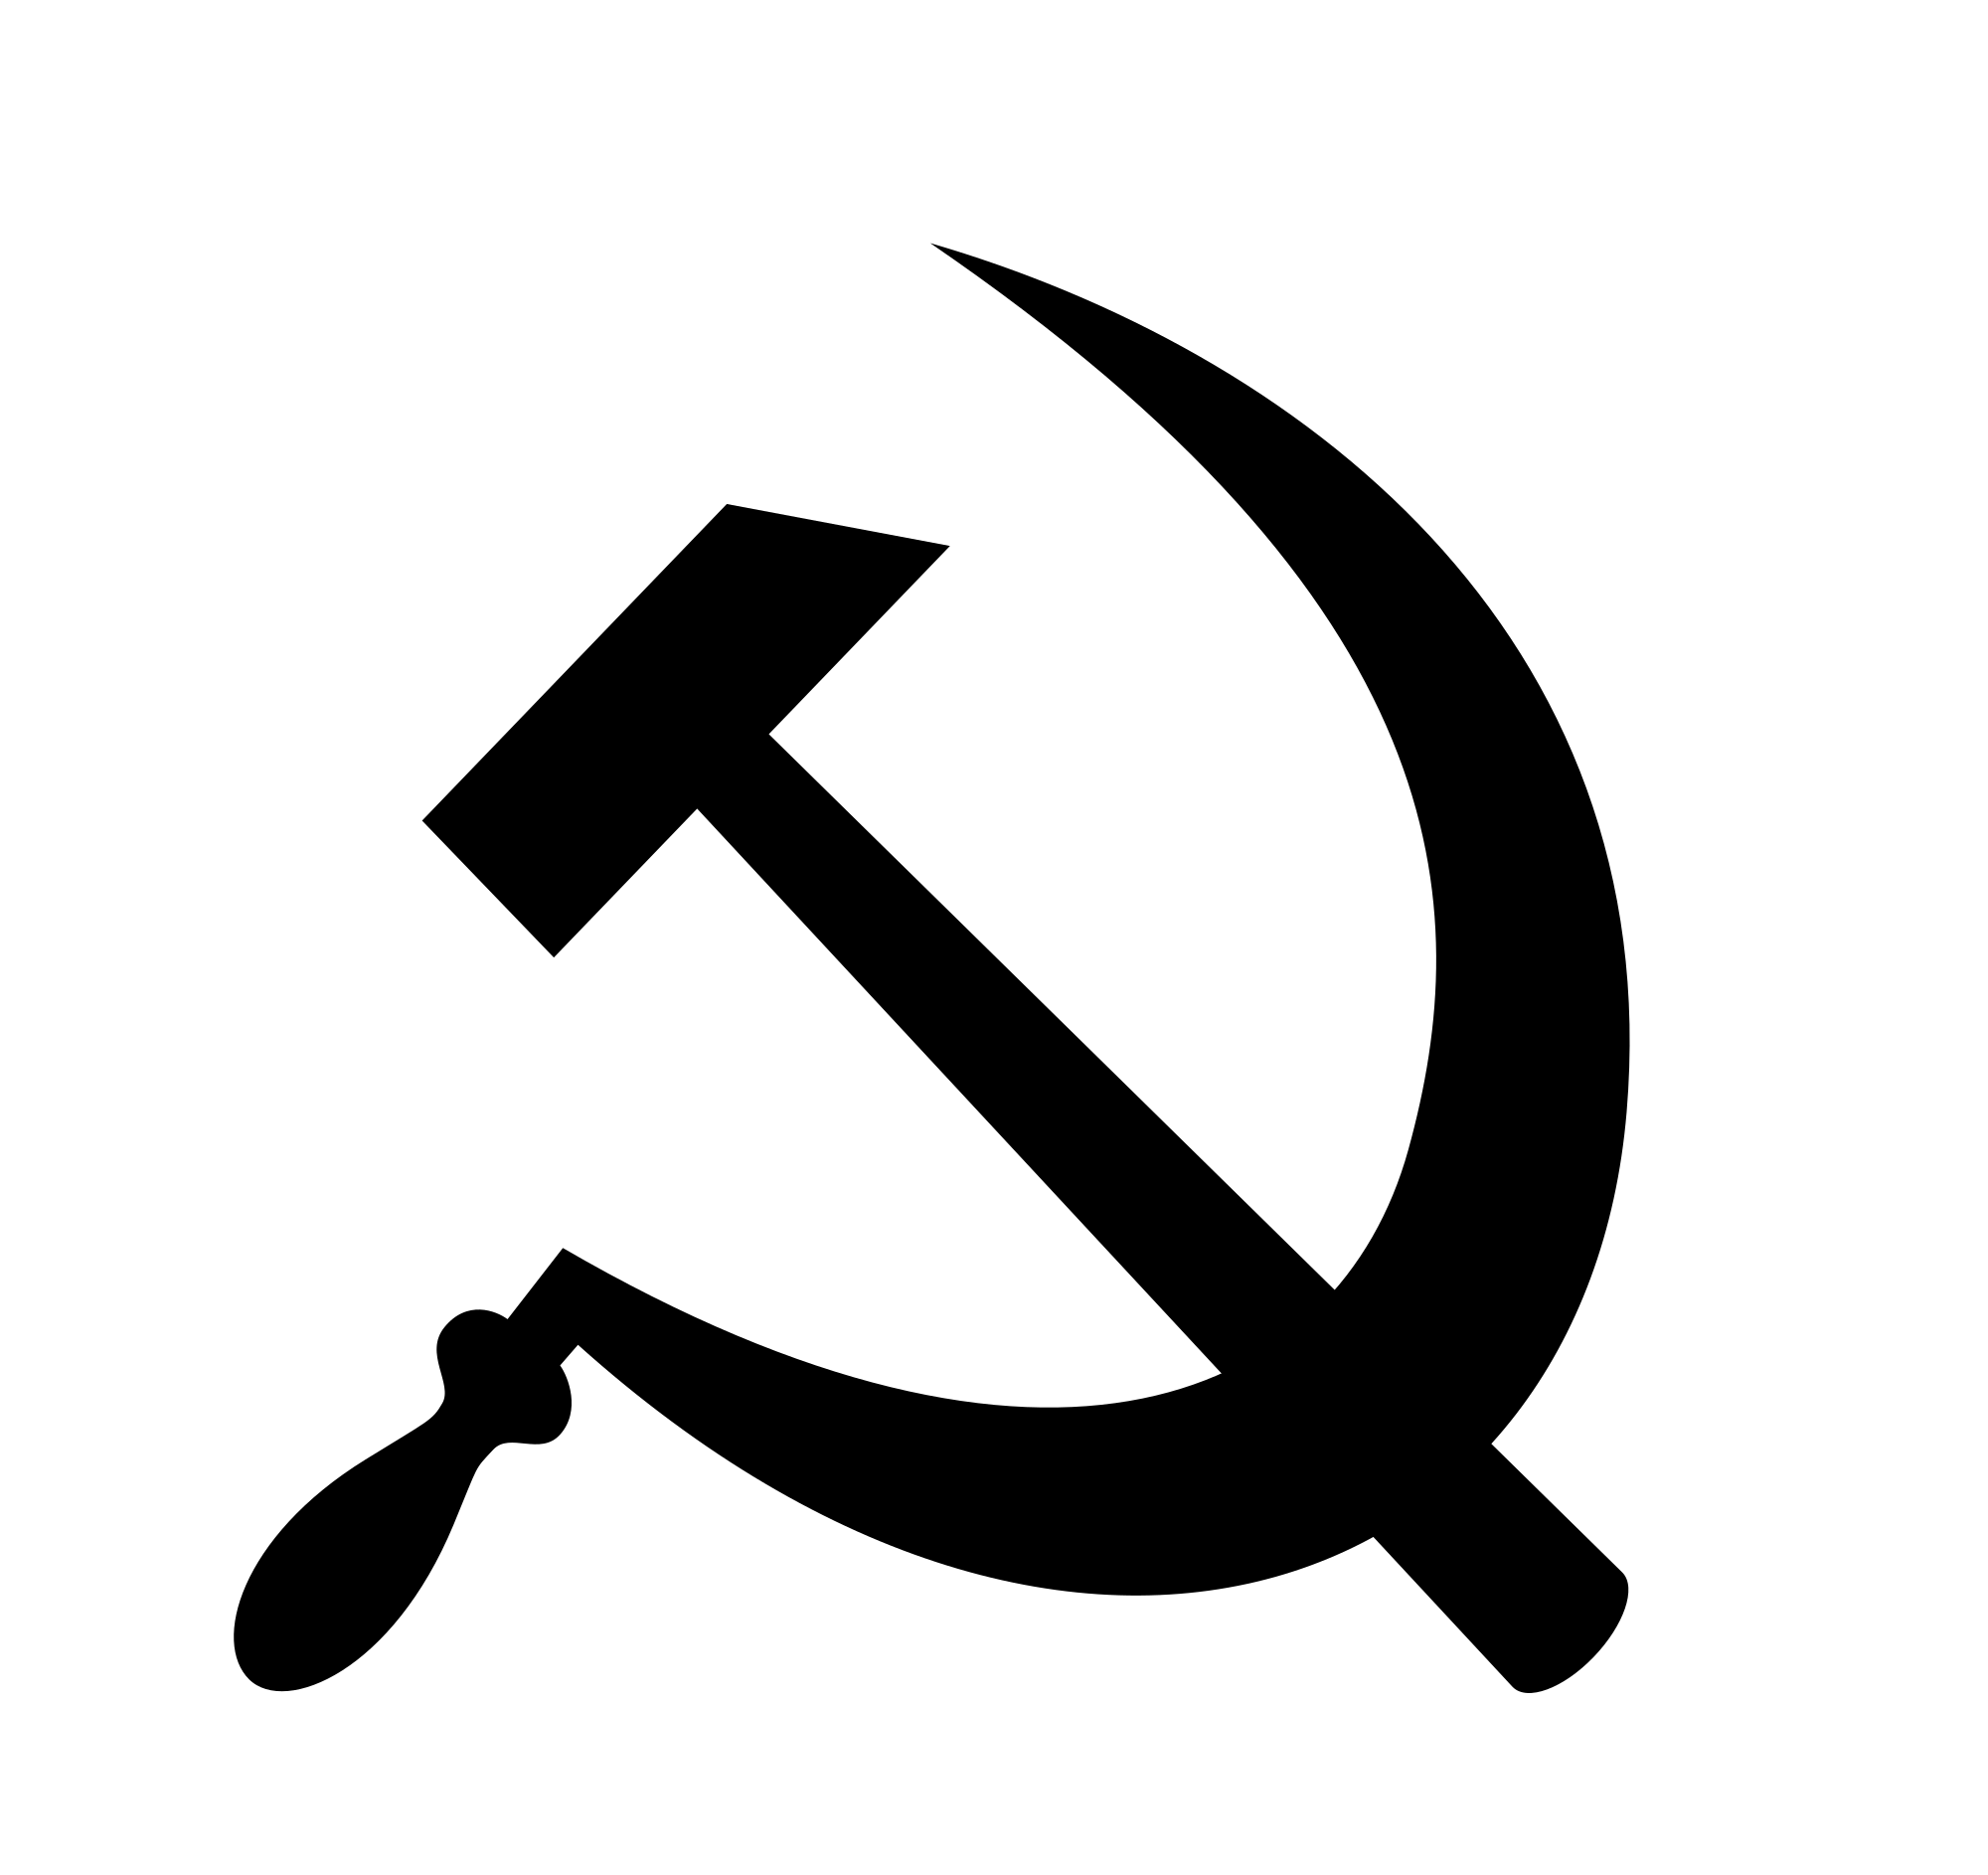 Soviet Union Logo - Soviet Union logo PNG images, USSR PNG images free download